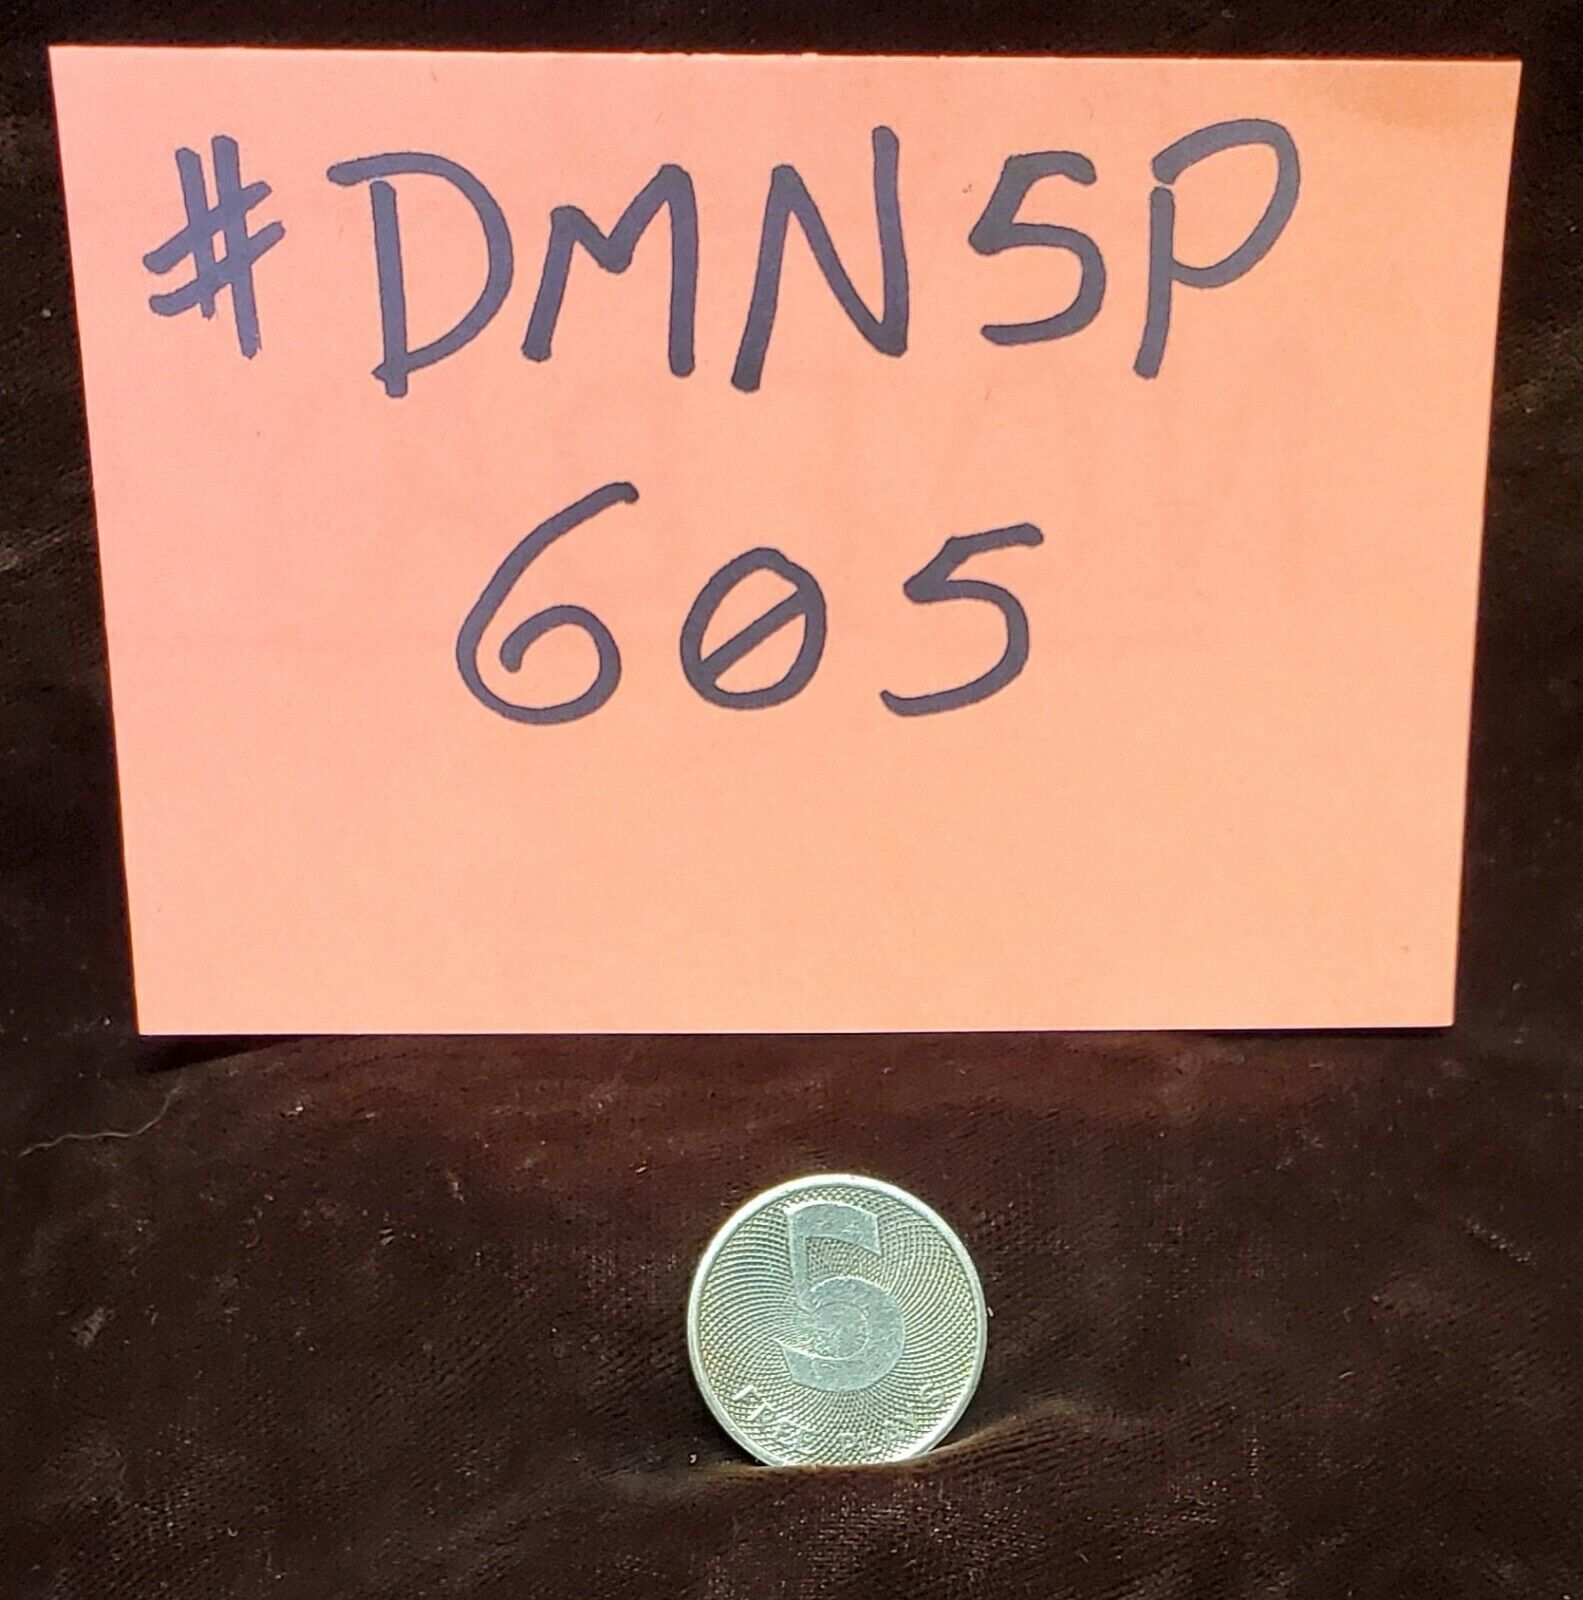 DAVAL MERCURY TOKEN ANTIQUE TRADE STIMULATOR / SLOT MACHINE #DMN5P-605